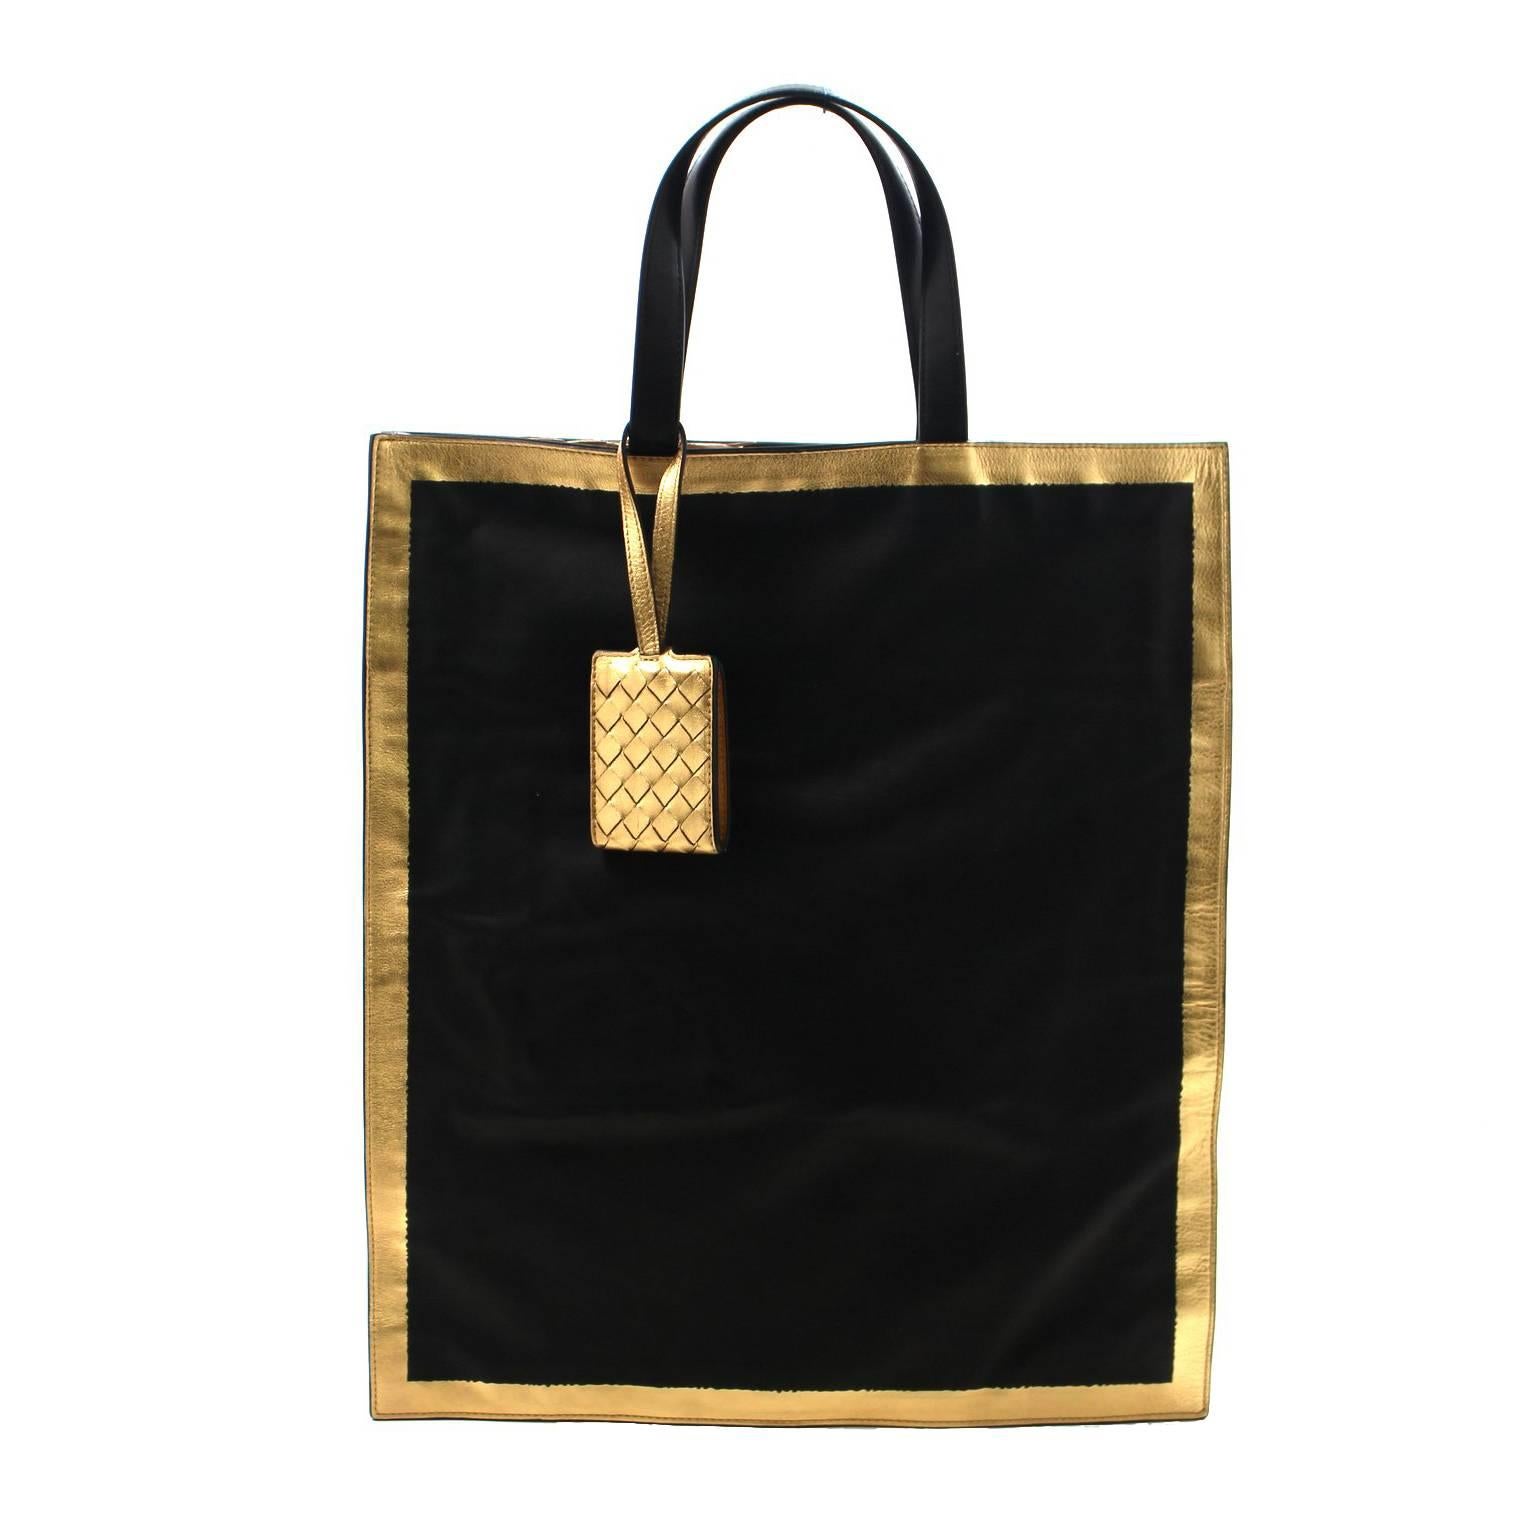 Bottega Veneta Black and Gold Leather Tote Bag